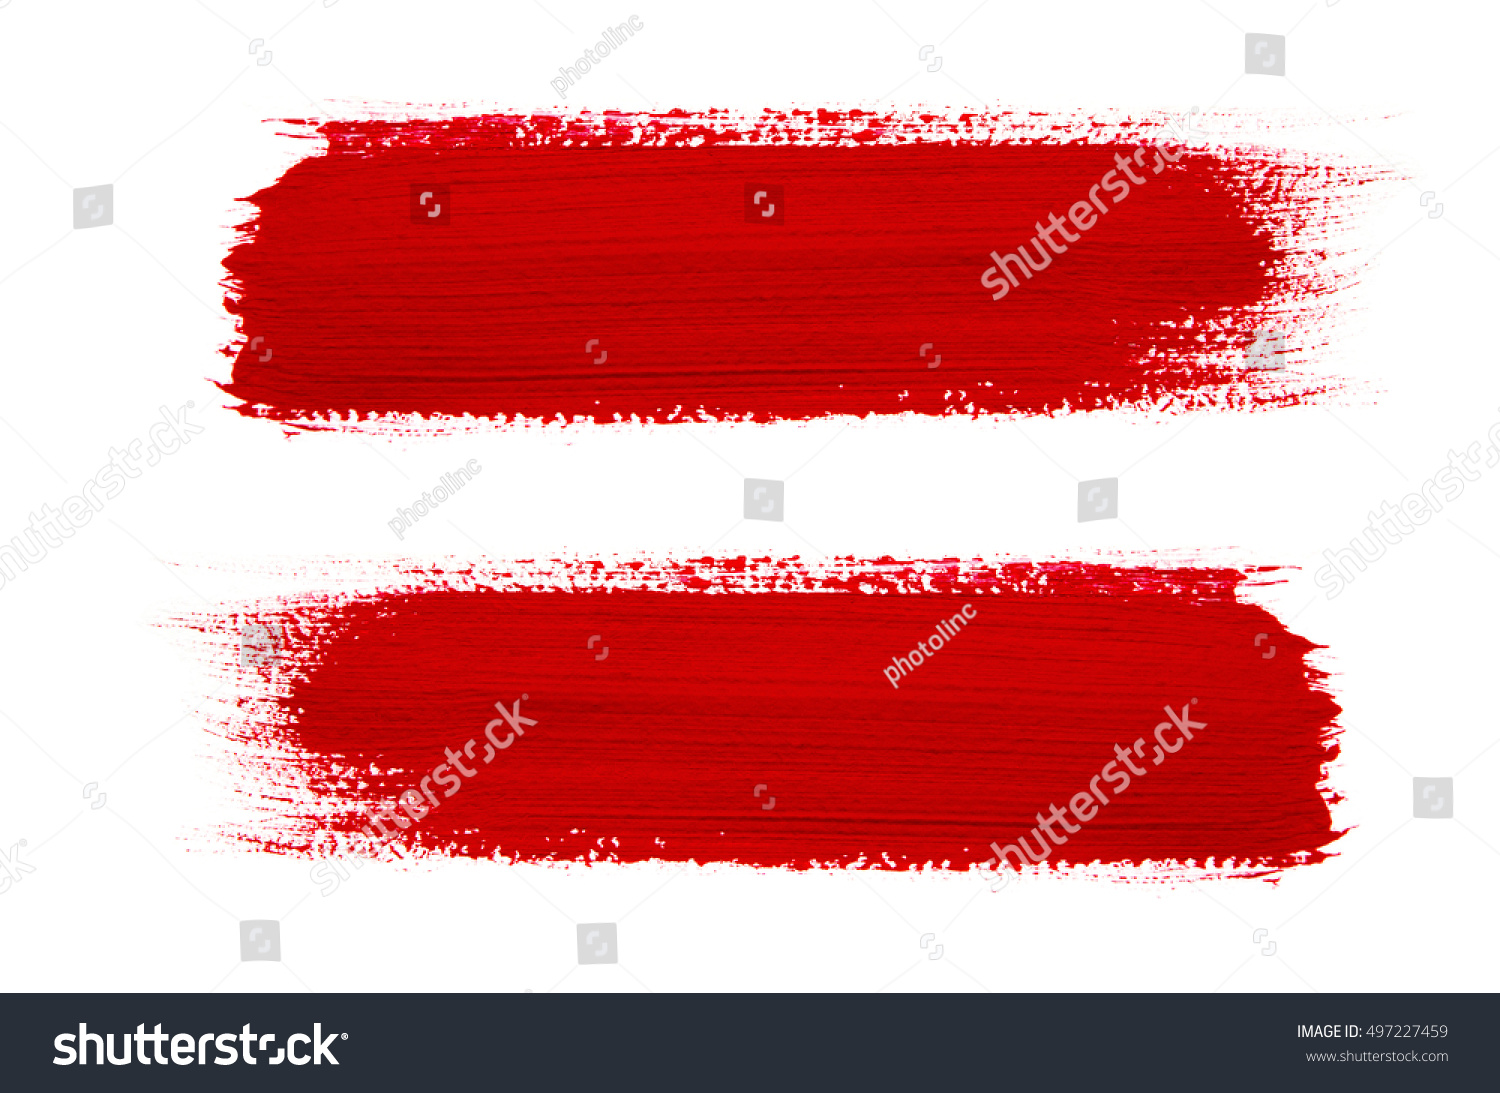 Red brush stroke isolated on grunge background #497227459